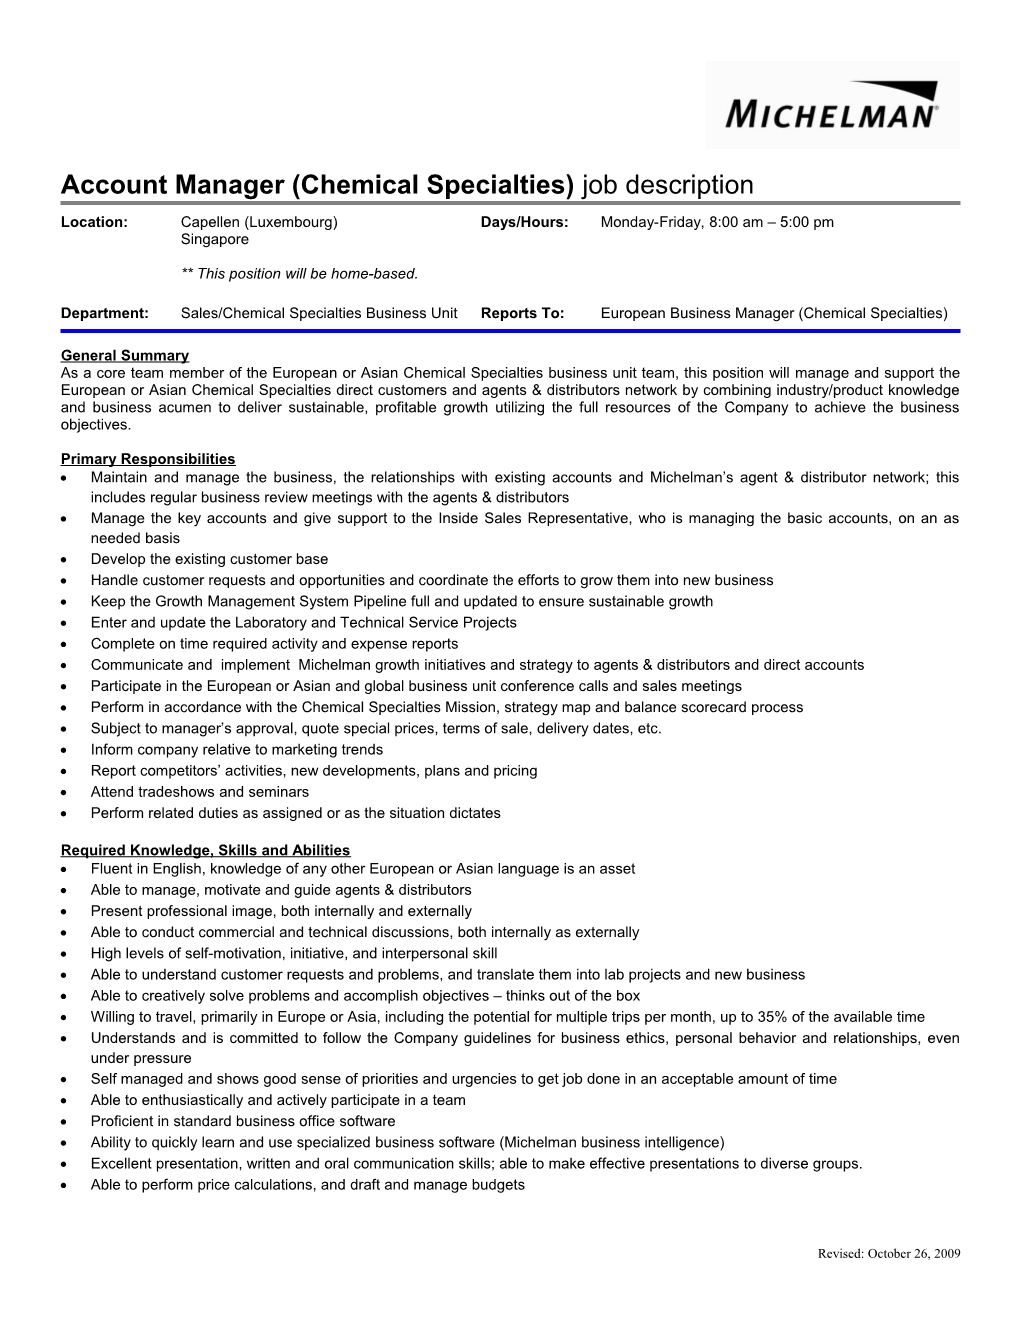 Account Manager (Chemical Specialties) Job Description